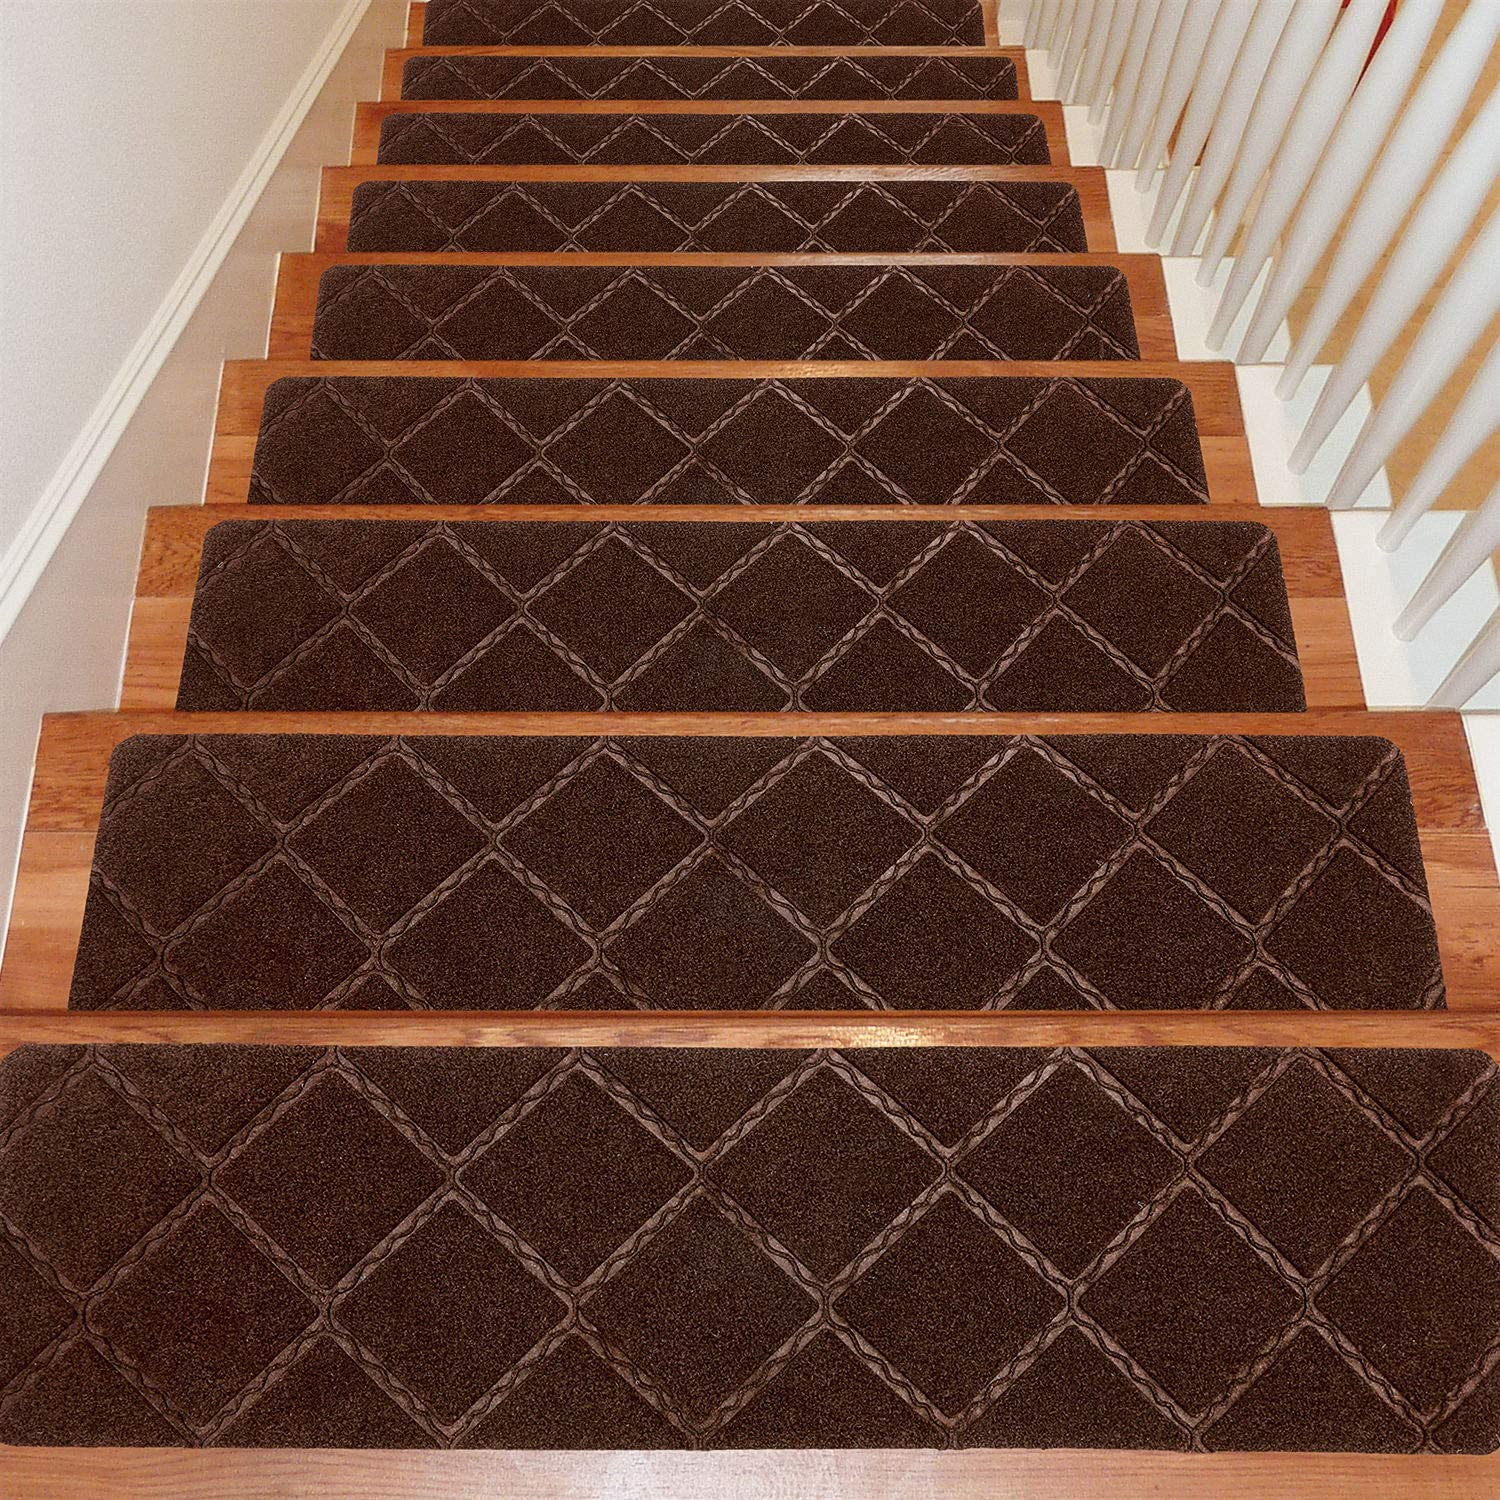 Seloom Indoor Non-Skid Backing Carpet Stair Tread Rug